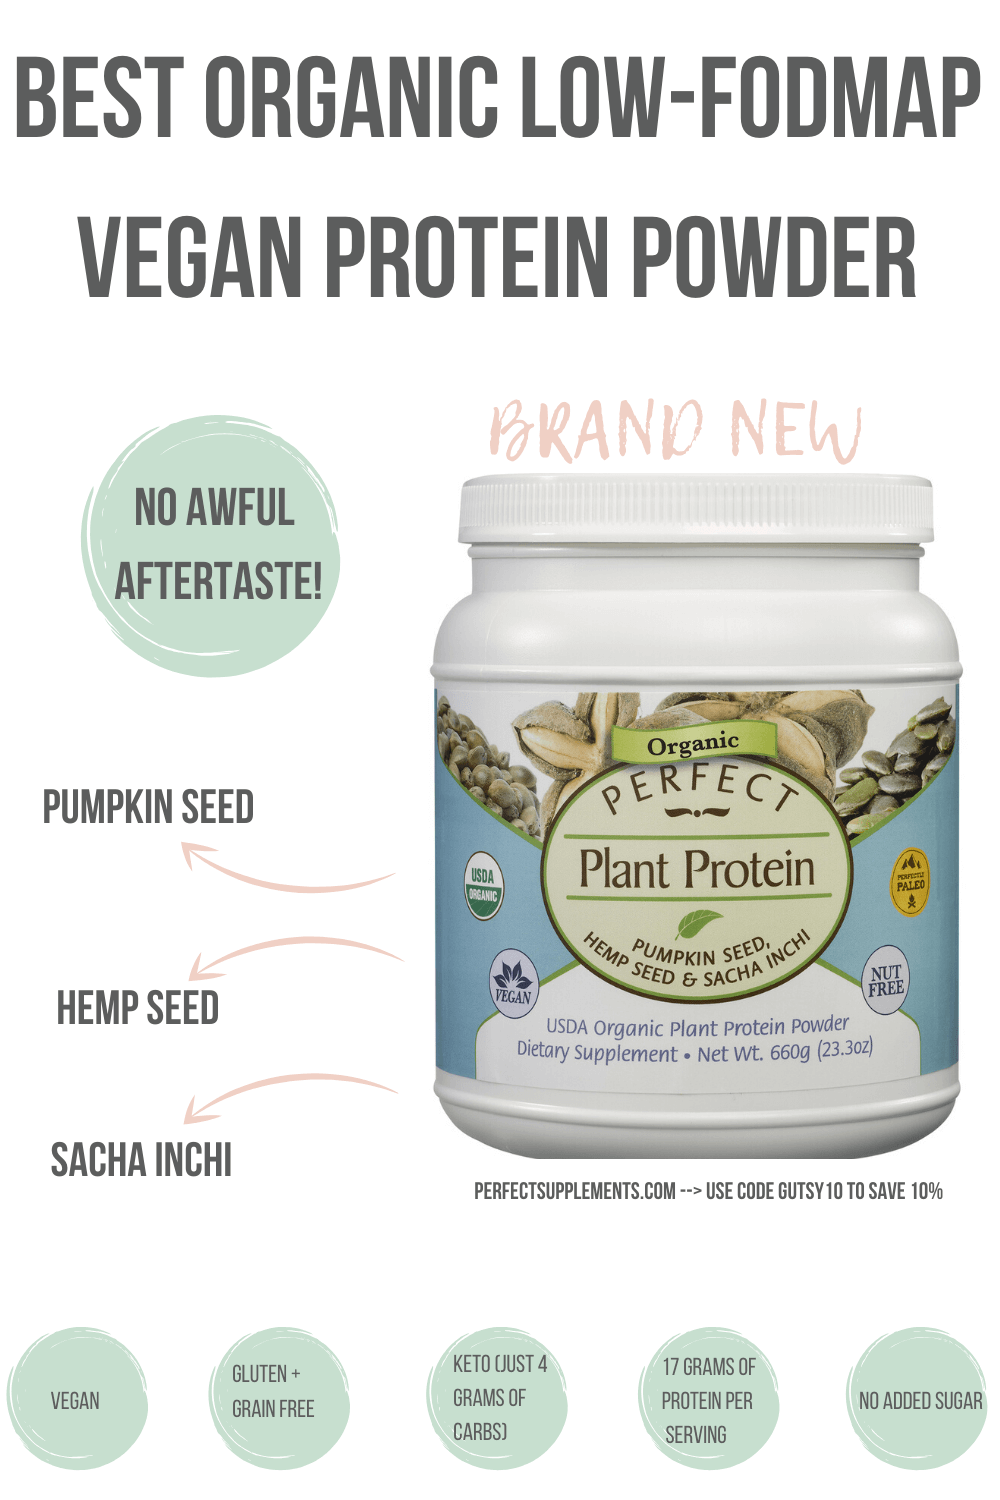 Best Organic Low-FODMAP Vegan Protein Powder #guthealth #lowfodmap #sibo #veganprotein